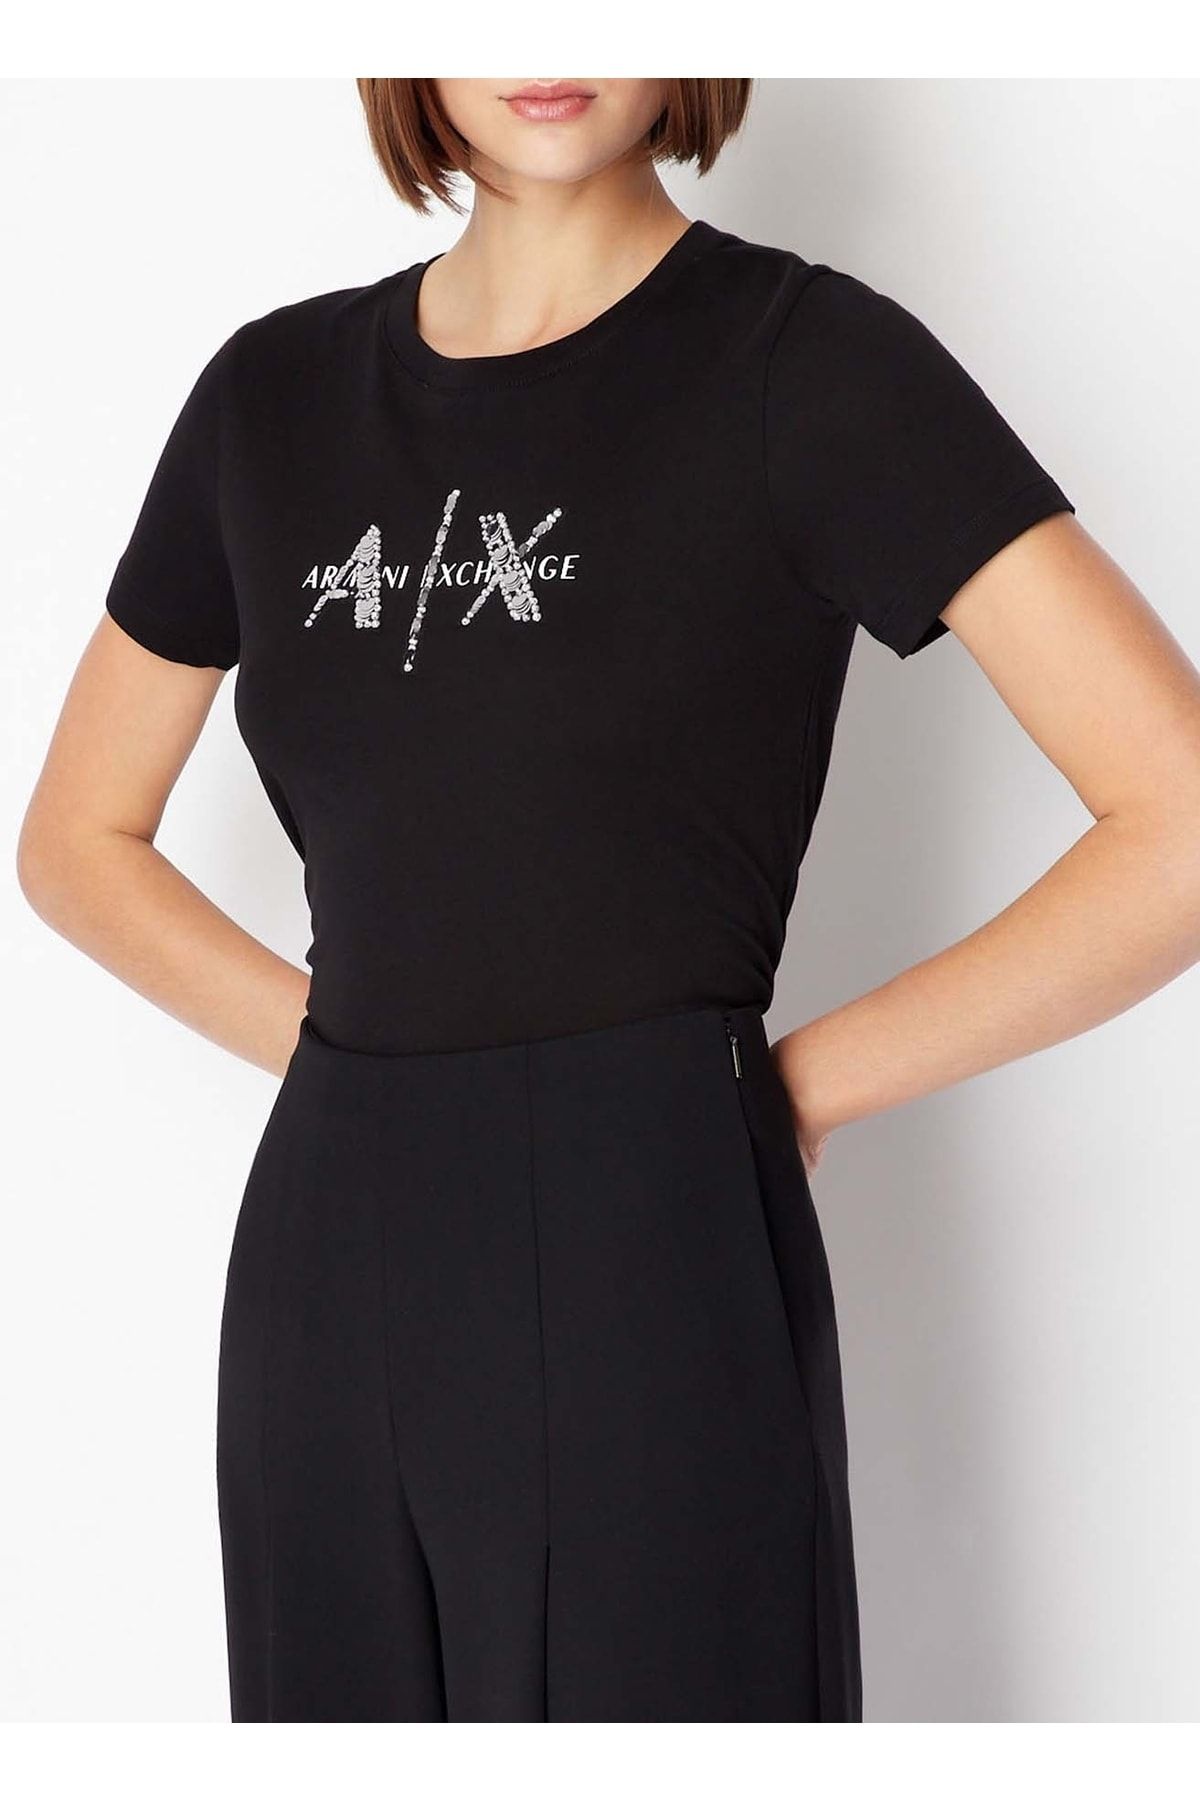 Armani Exchange Baskılı Siyah Kadın T-shirt 3rytbq